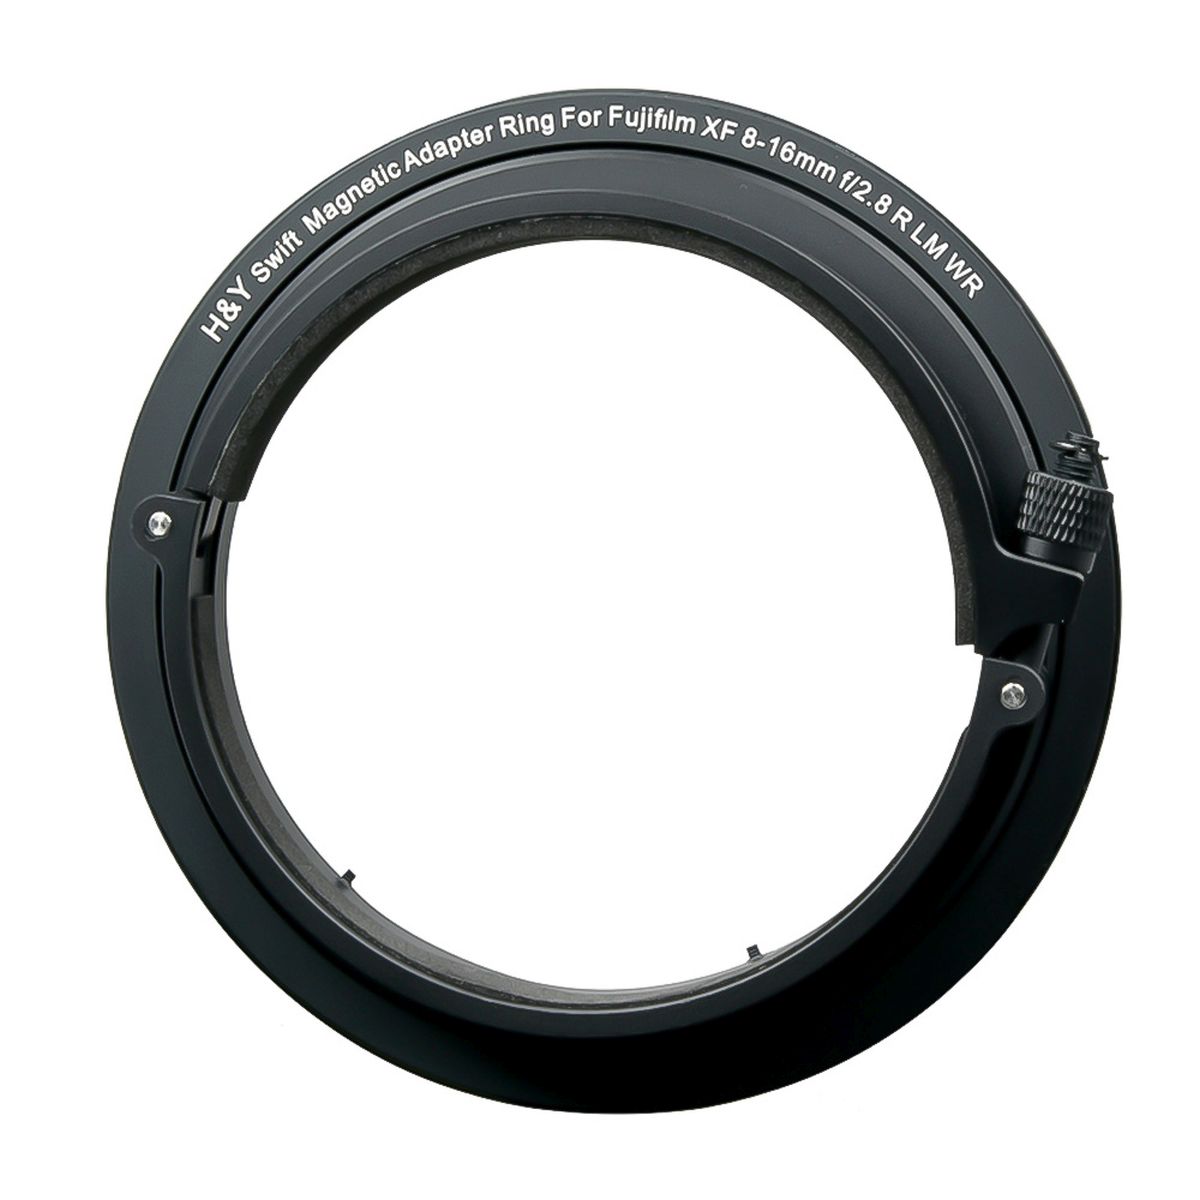 H&Y Swift Fujifilm 2,8/8-16 mm R Adapter magnetisch